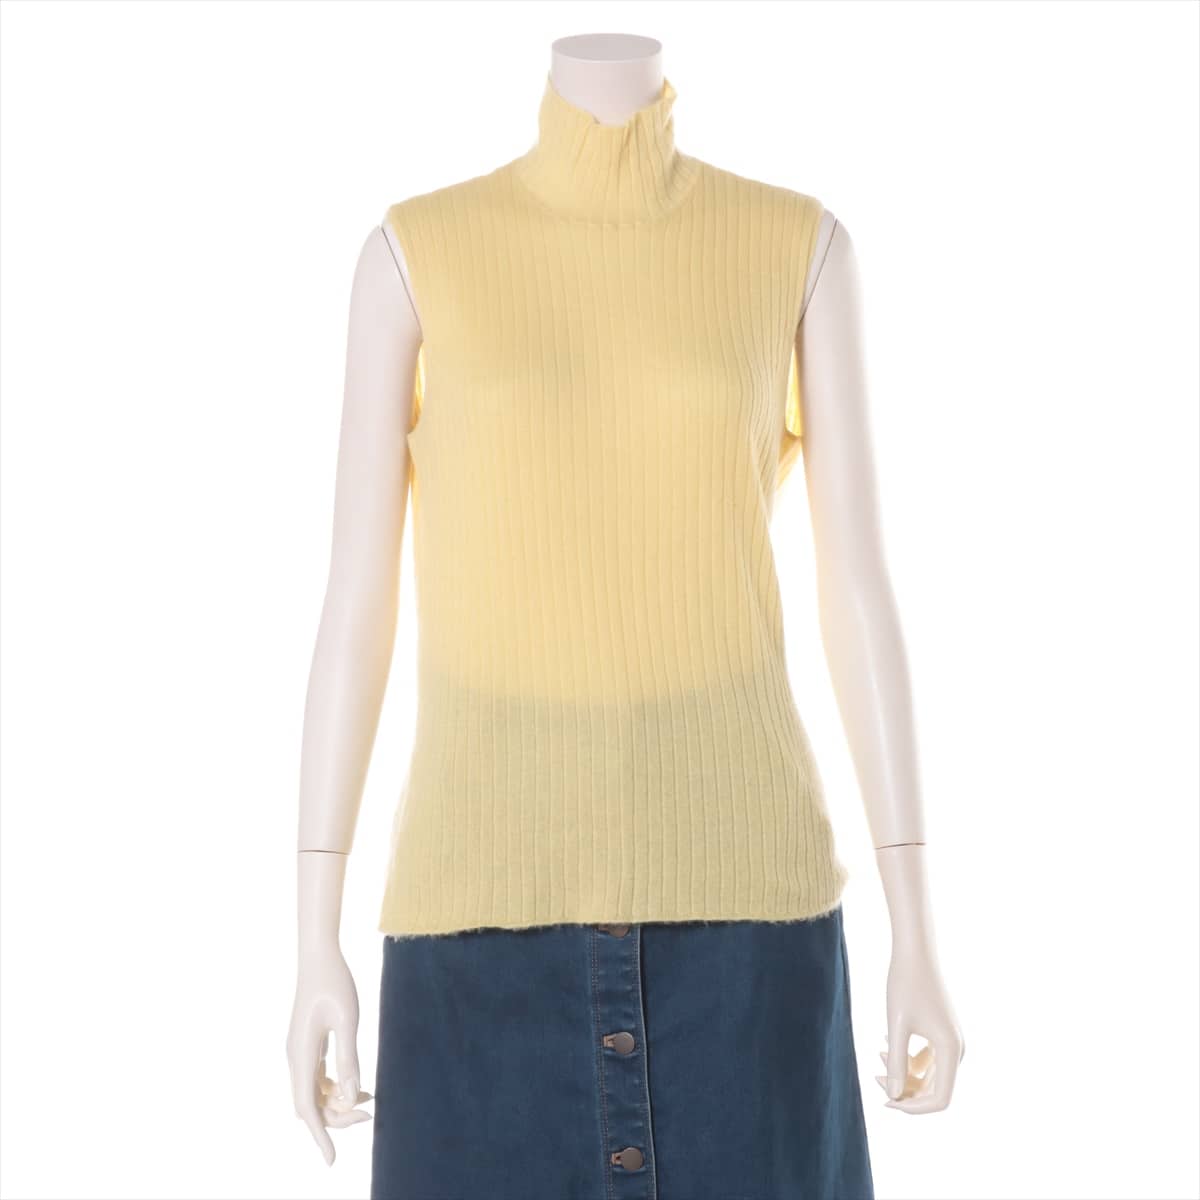 Hermès Margiela Unknown material Sleeveless Knit XL Ladies' Yellow No sign tag